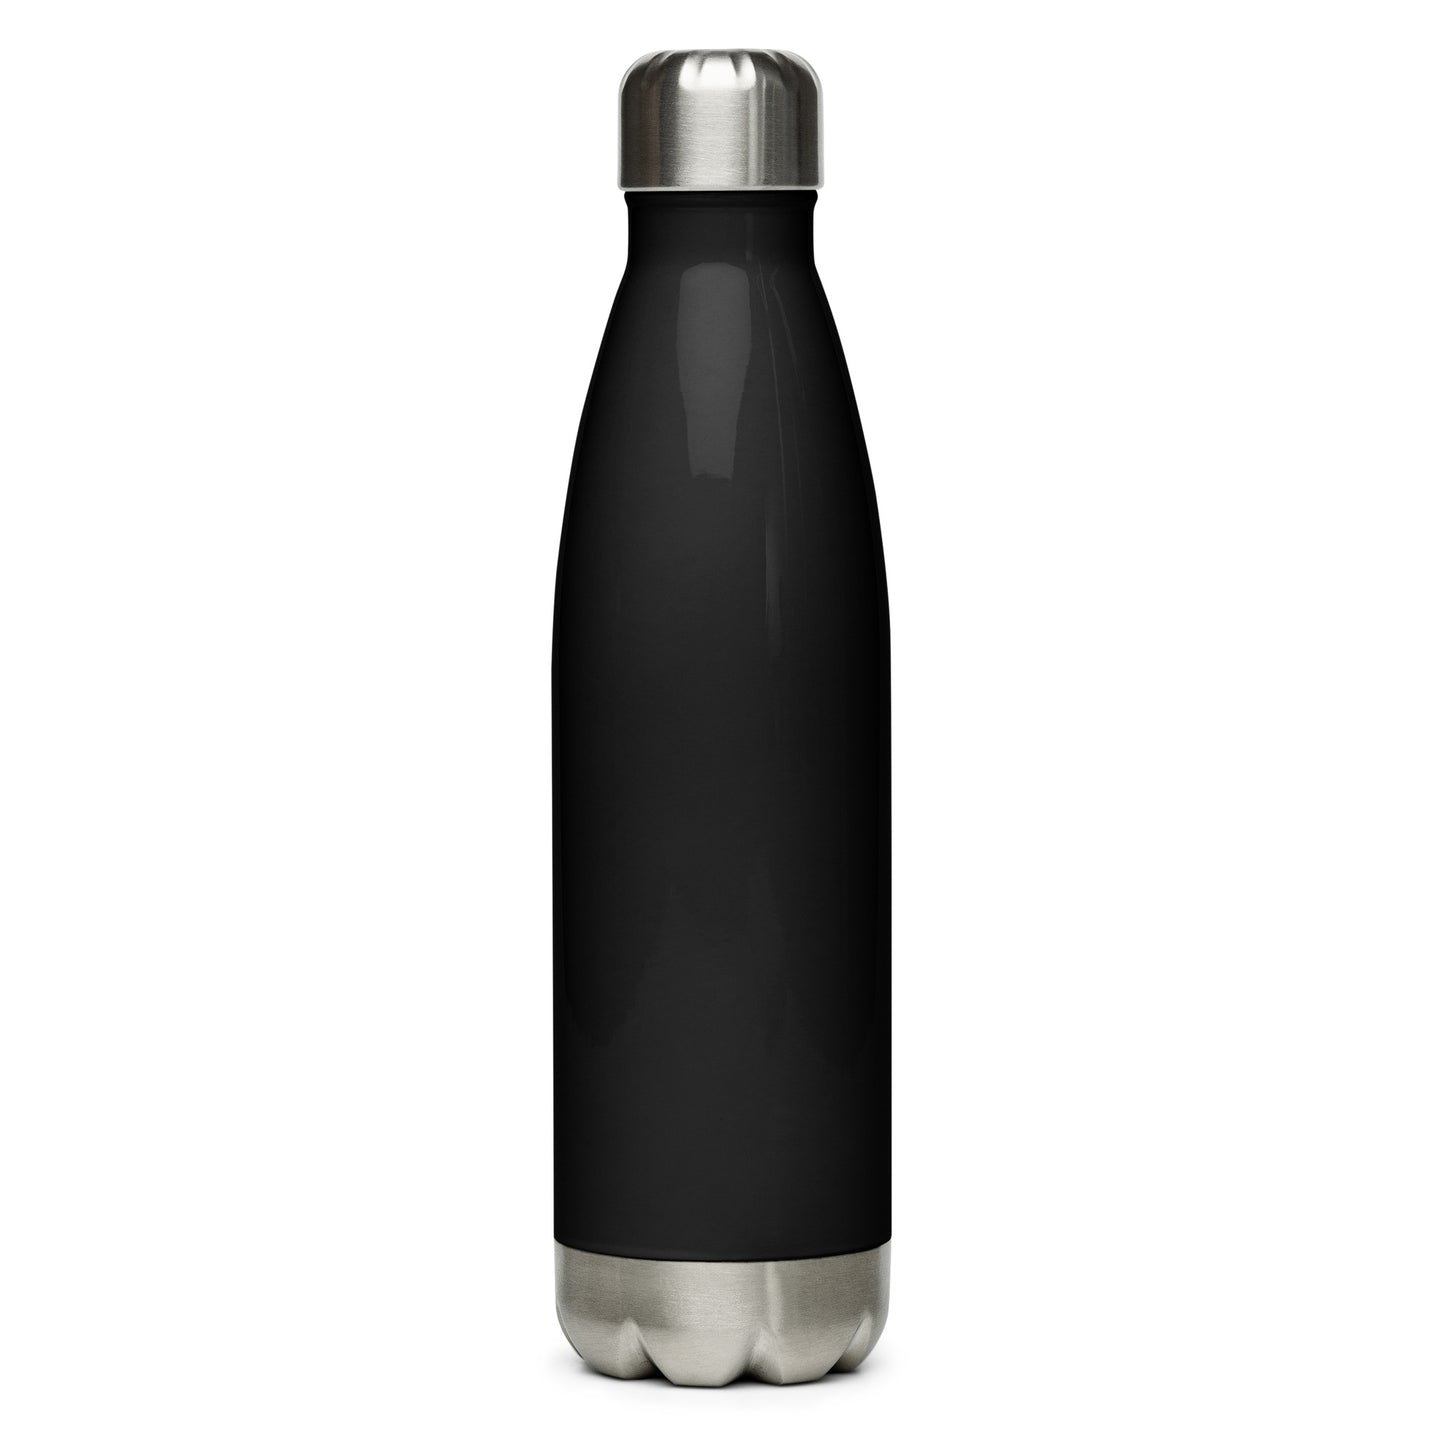 TriSystem Stainless Steel Water Bottle